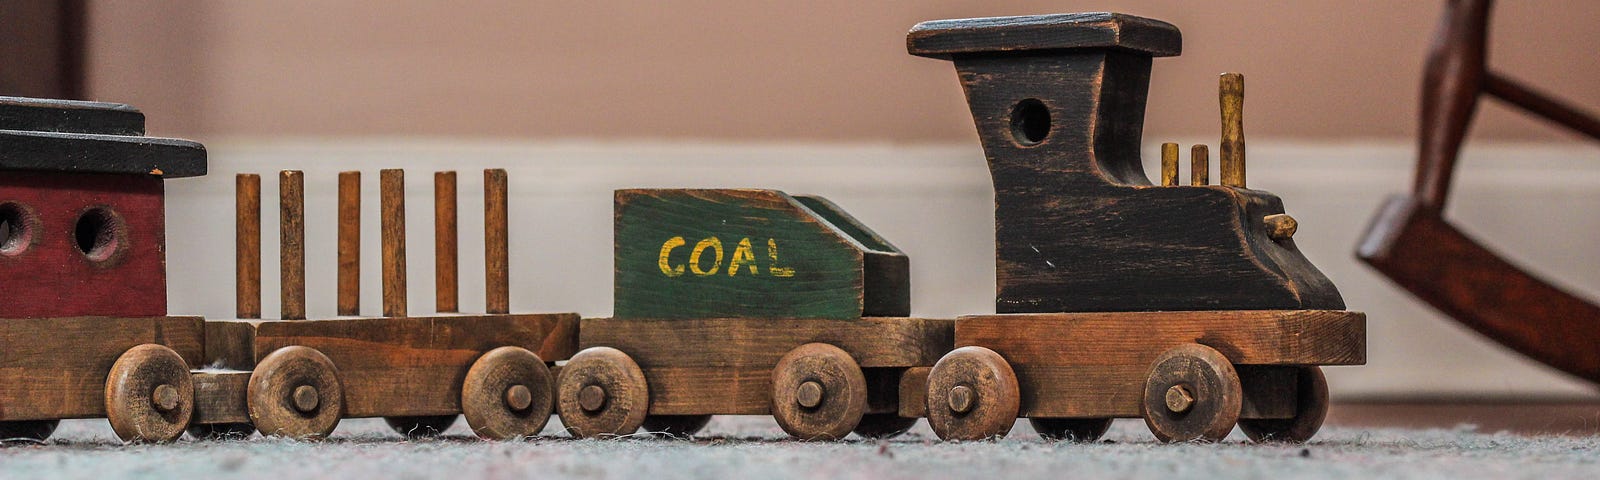 Antique wooden train toy